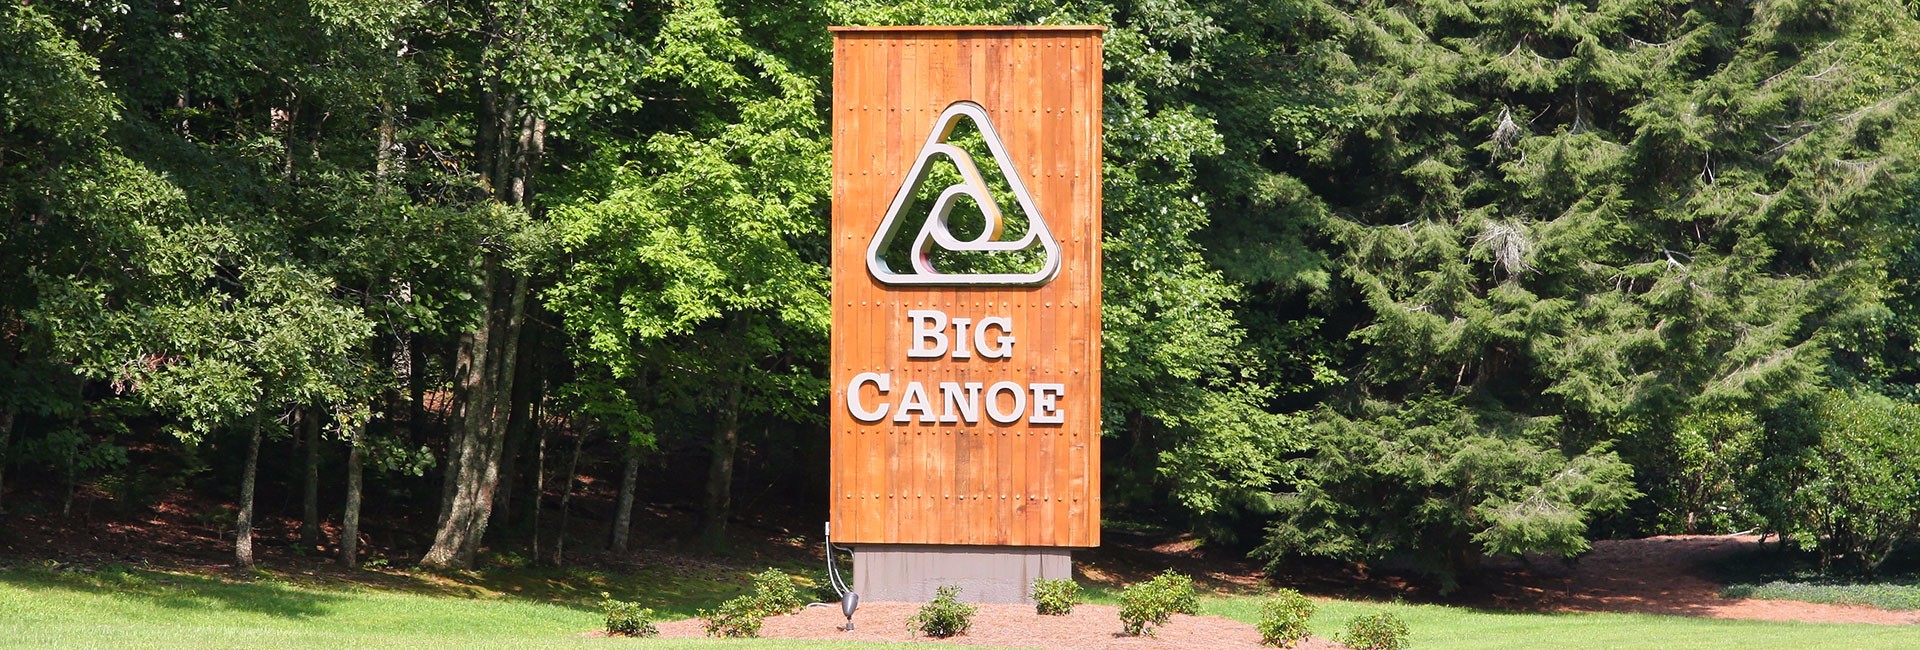 Big Canoe Real Estate